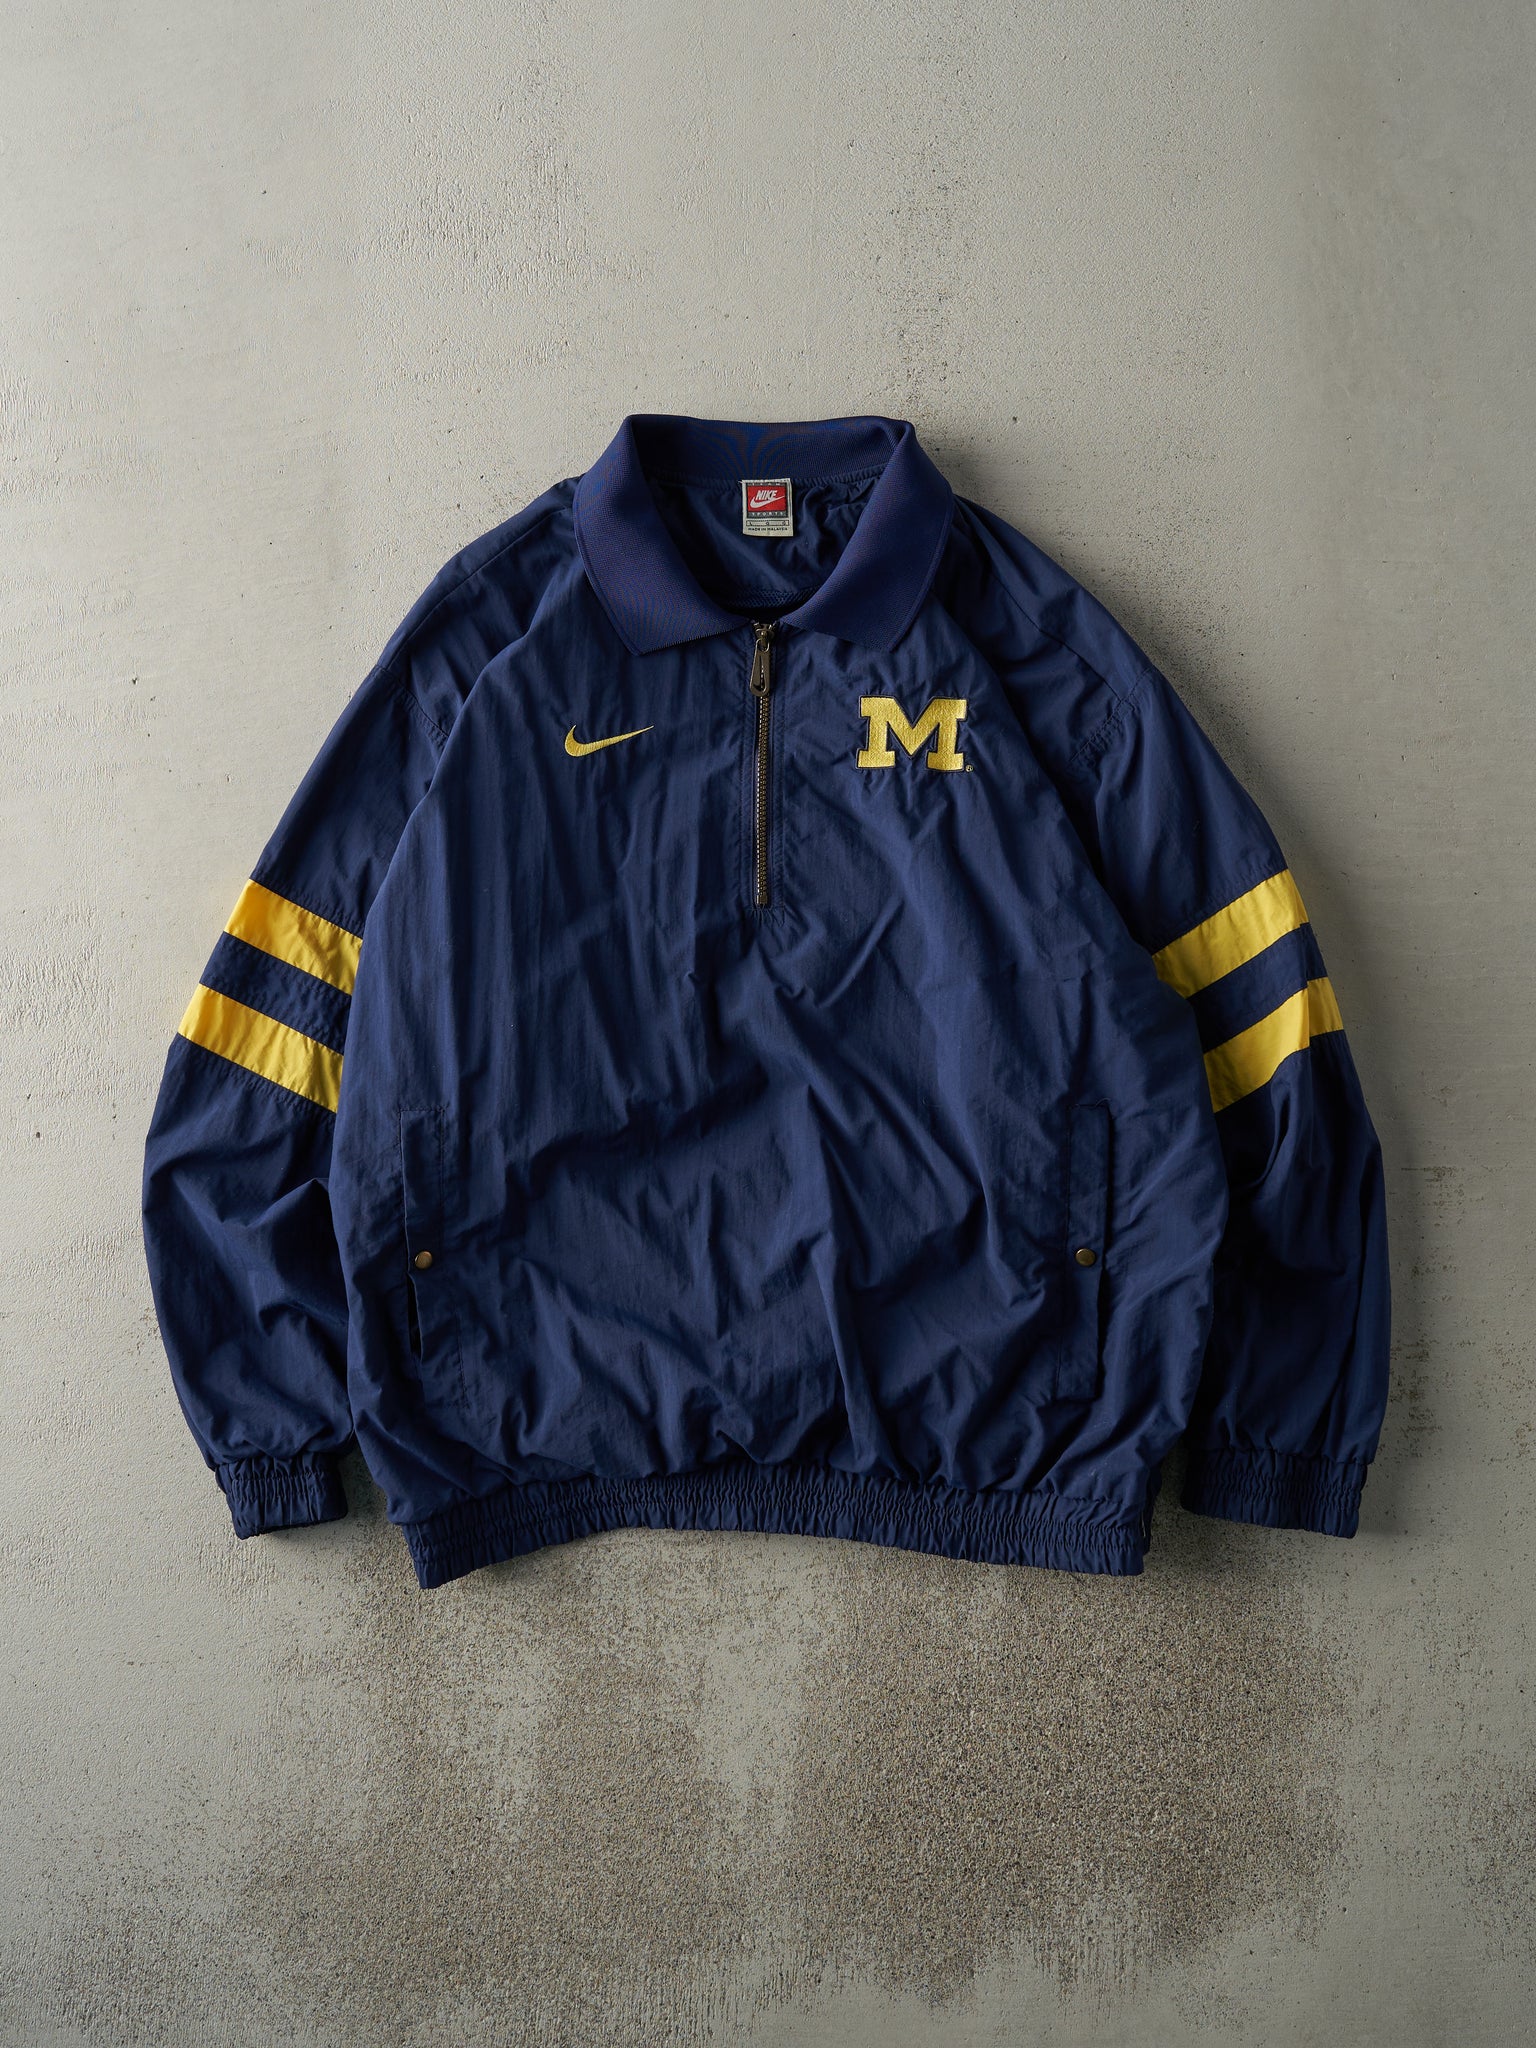 Vintage 90s Navy Blue University of Michigan Nike Quarter Zip Windbreaker (M/L)